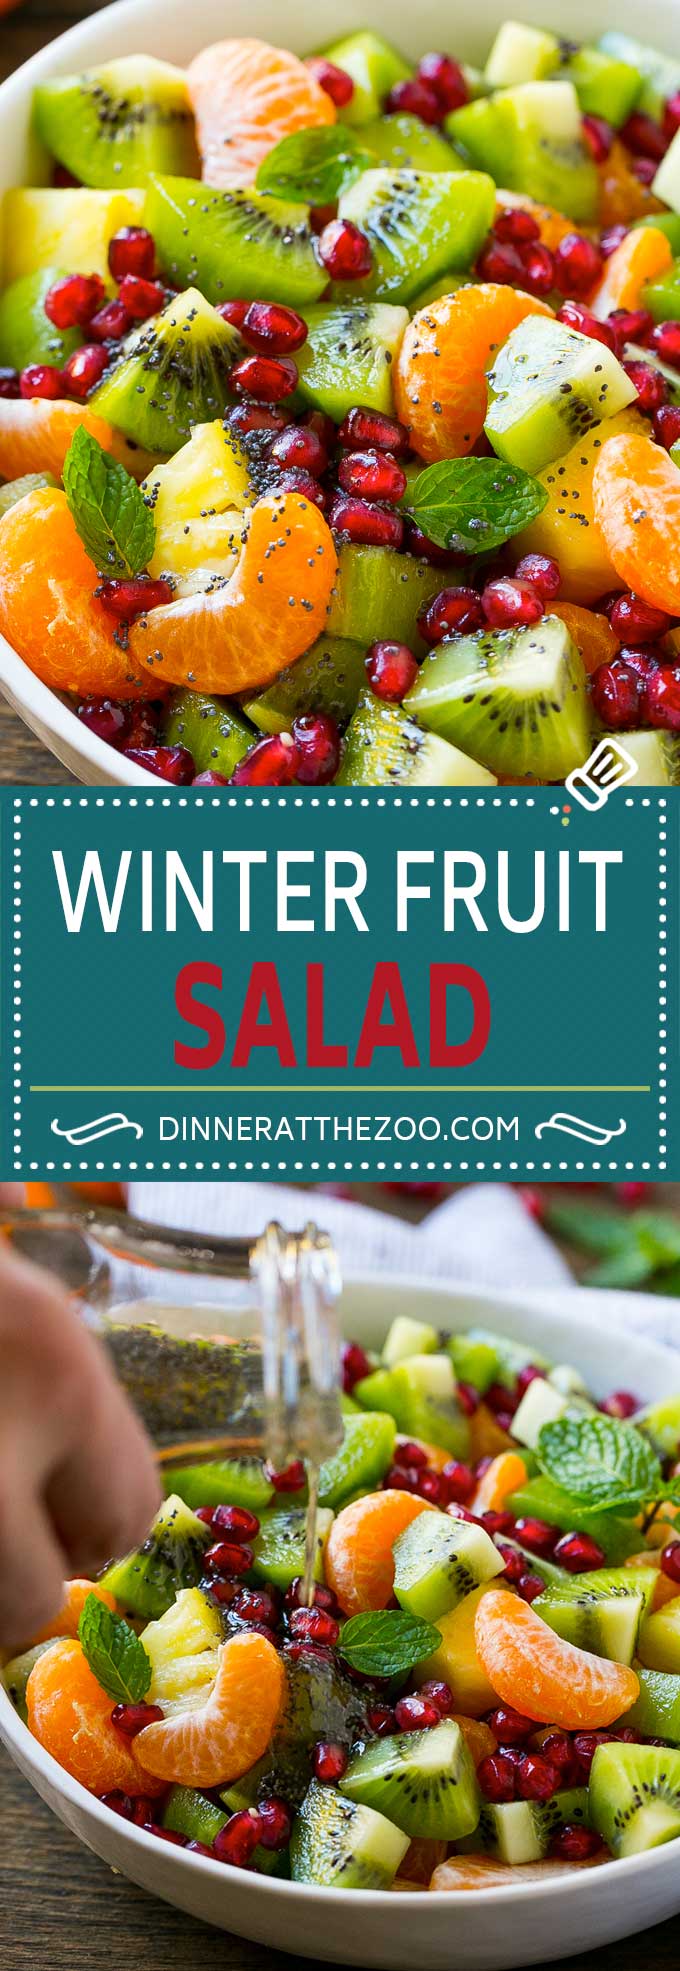 Winter Fruit Salad | Citrus Fruit Salad | Fruit Salad Recipe | Healthy Salad Recipe